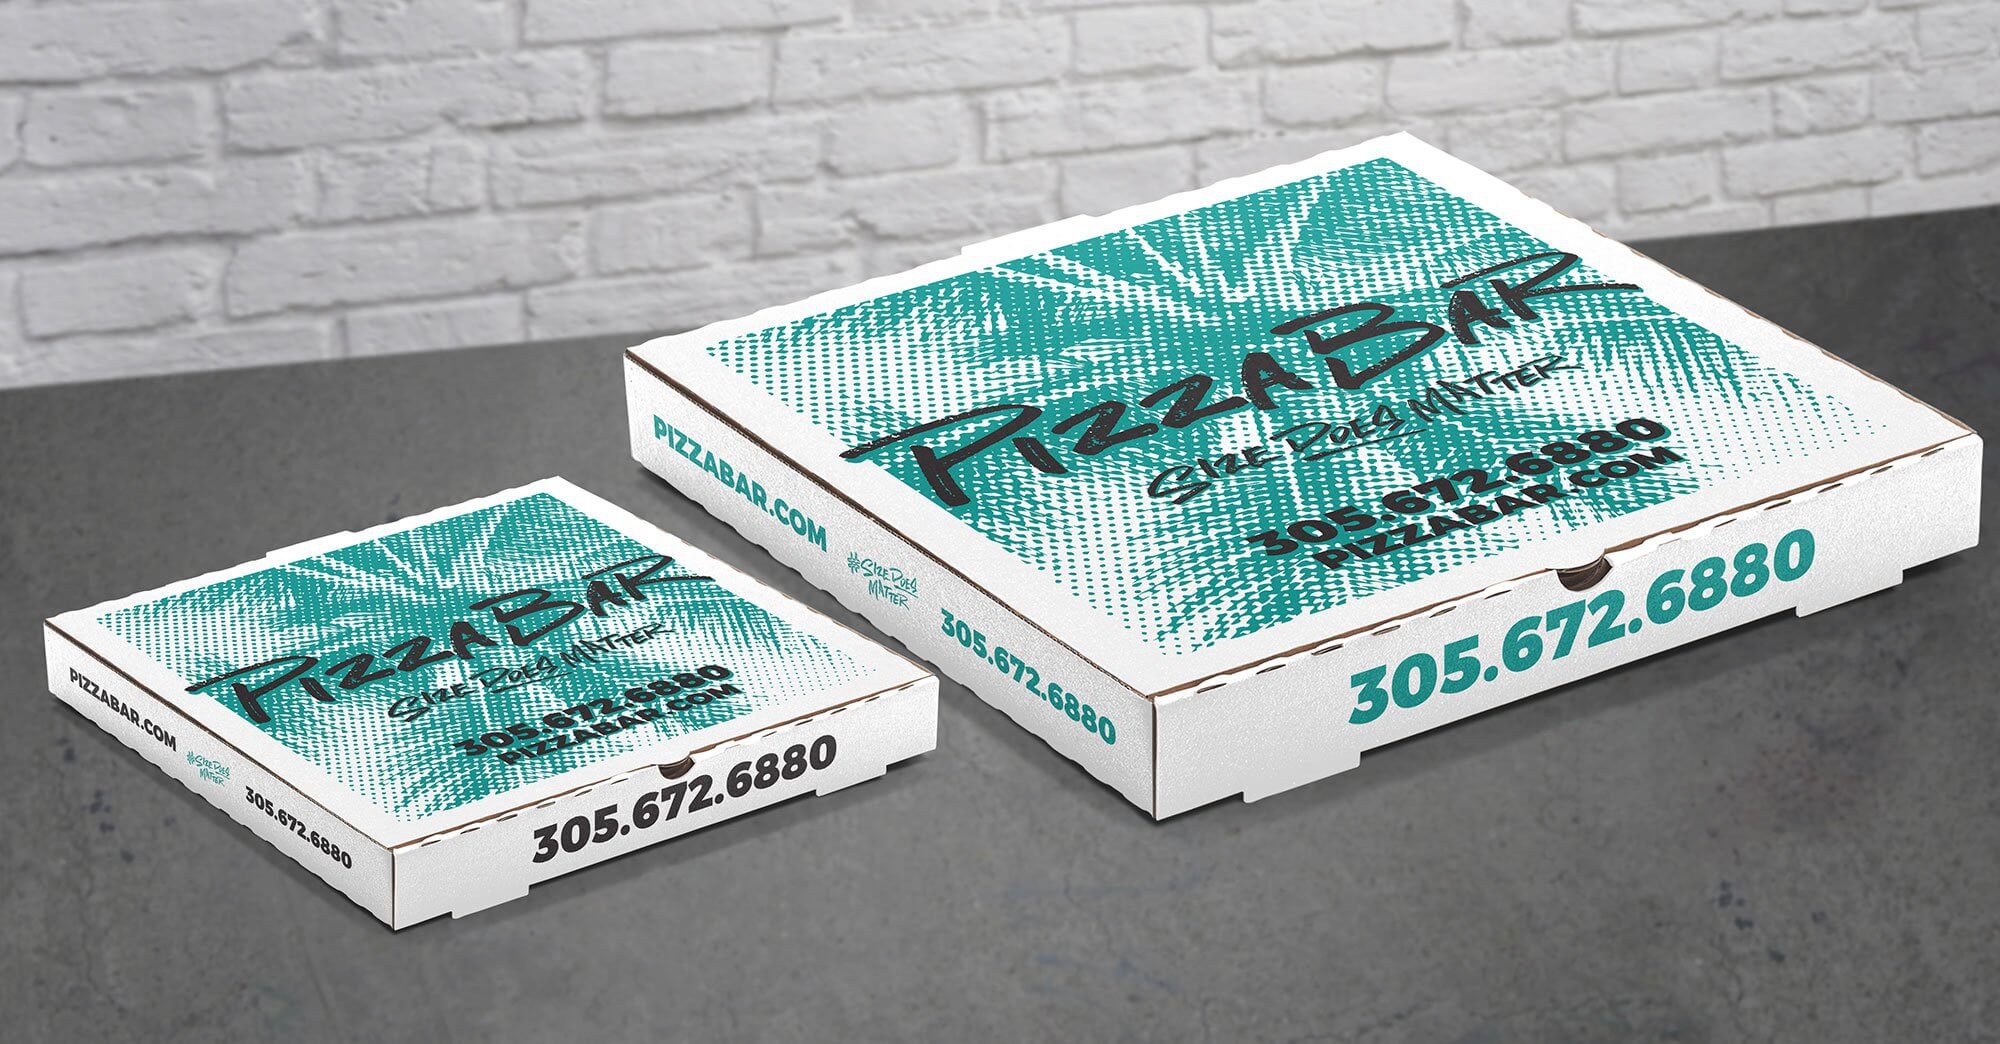 Pizza Bar branded delivery box design